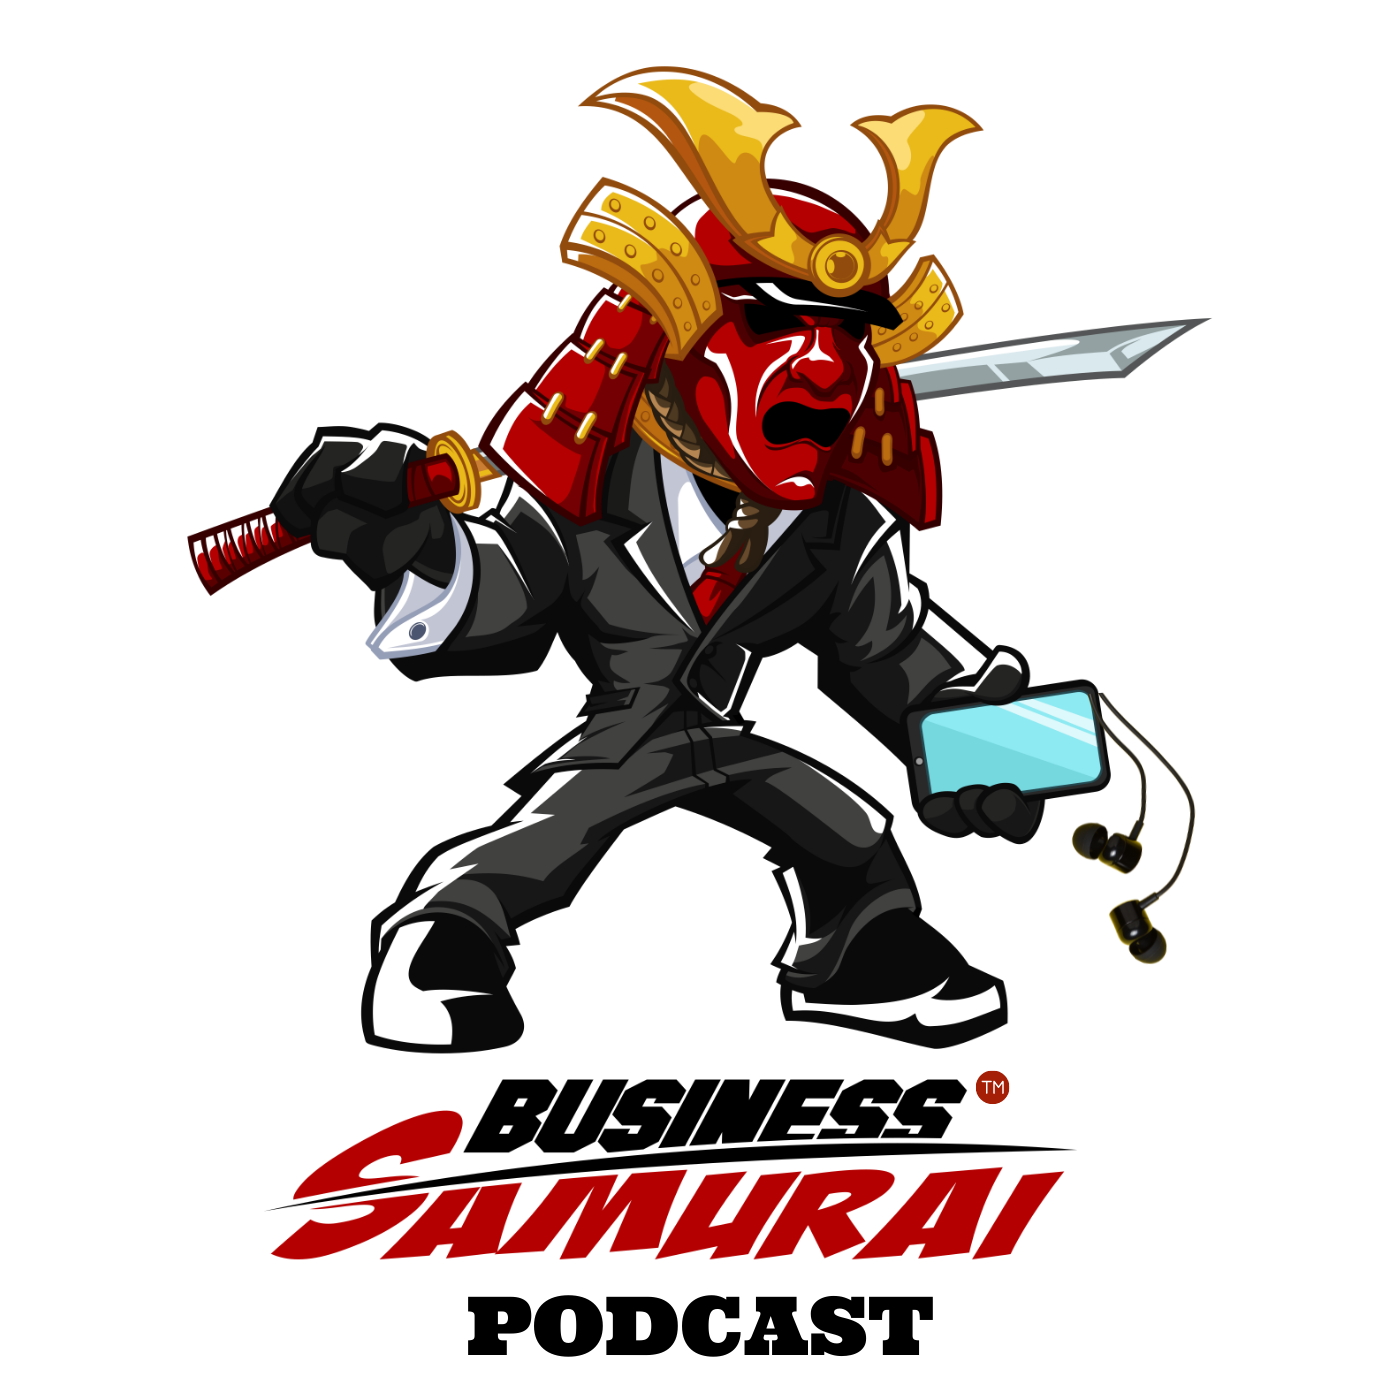 The Business Samurai Podcast